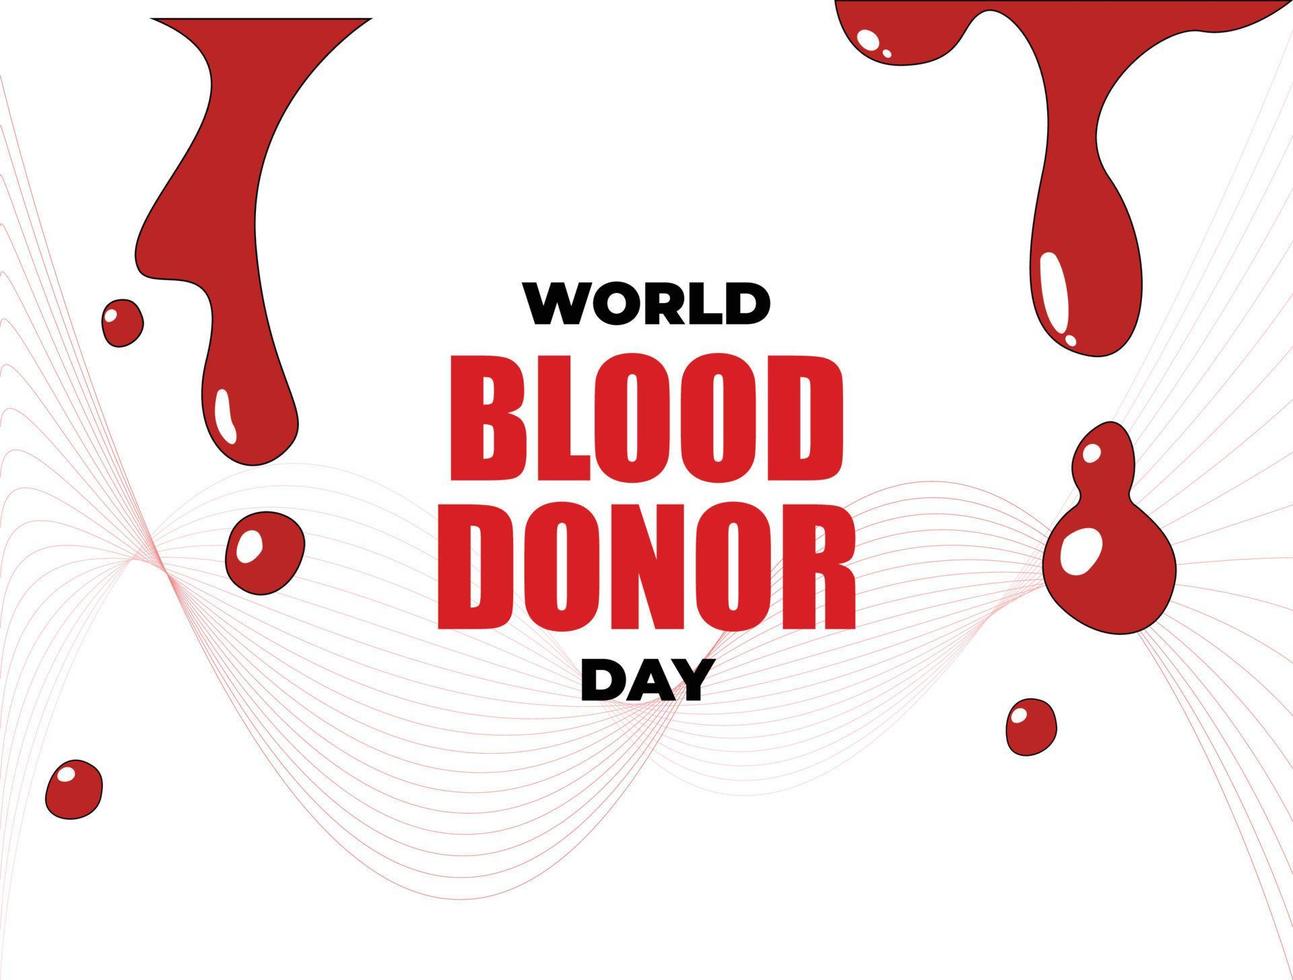 international blood donation, design for International blood donor day celebration vector